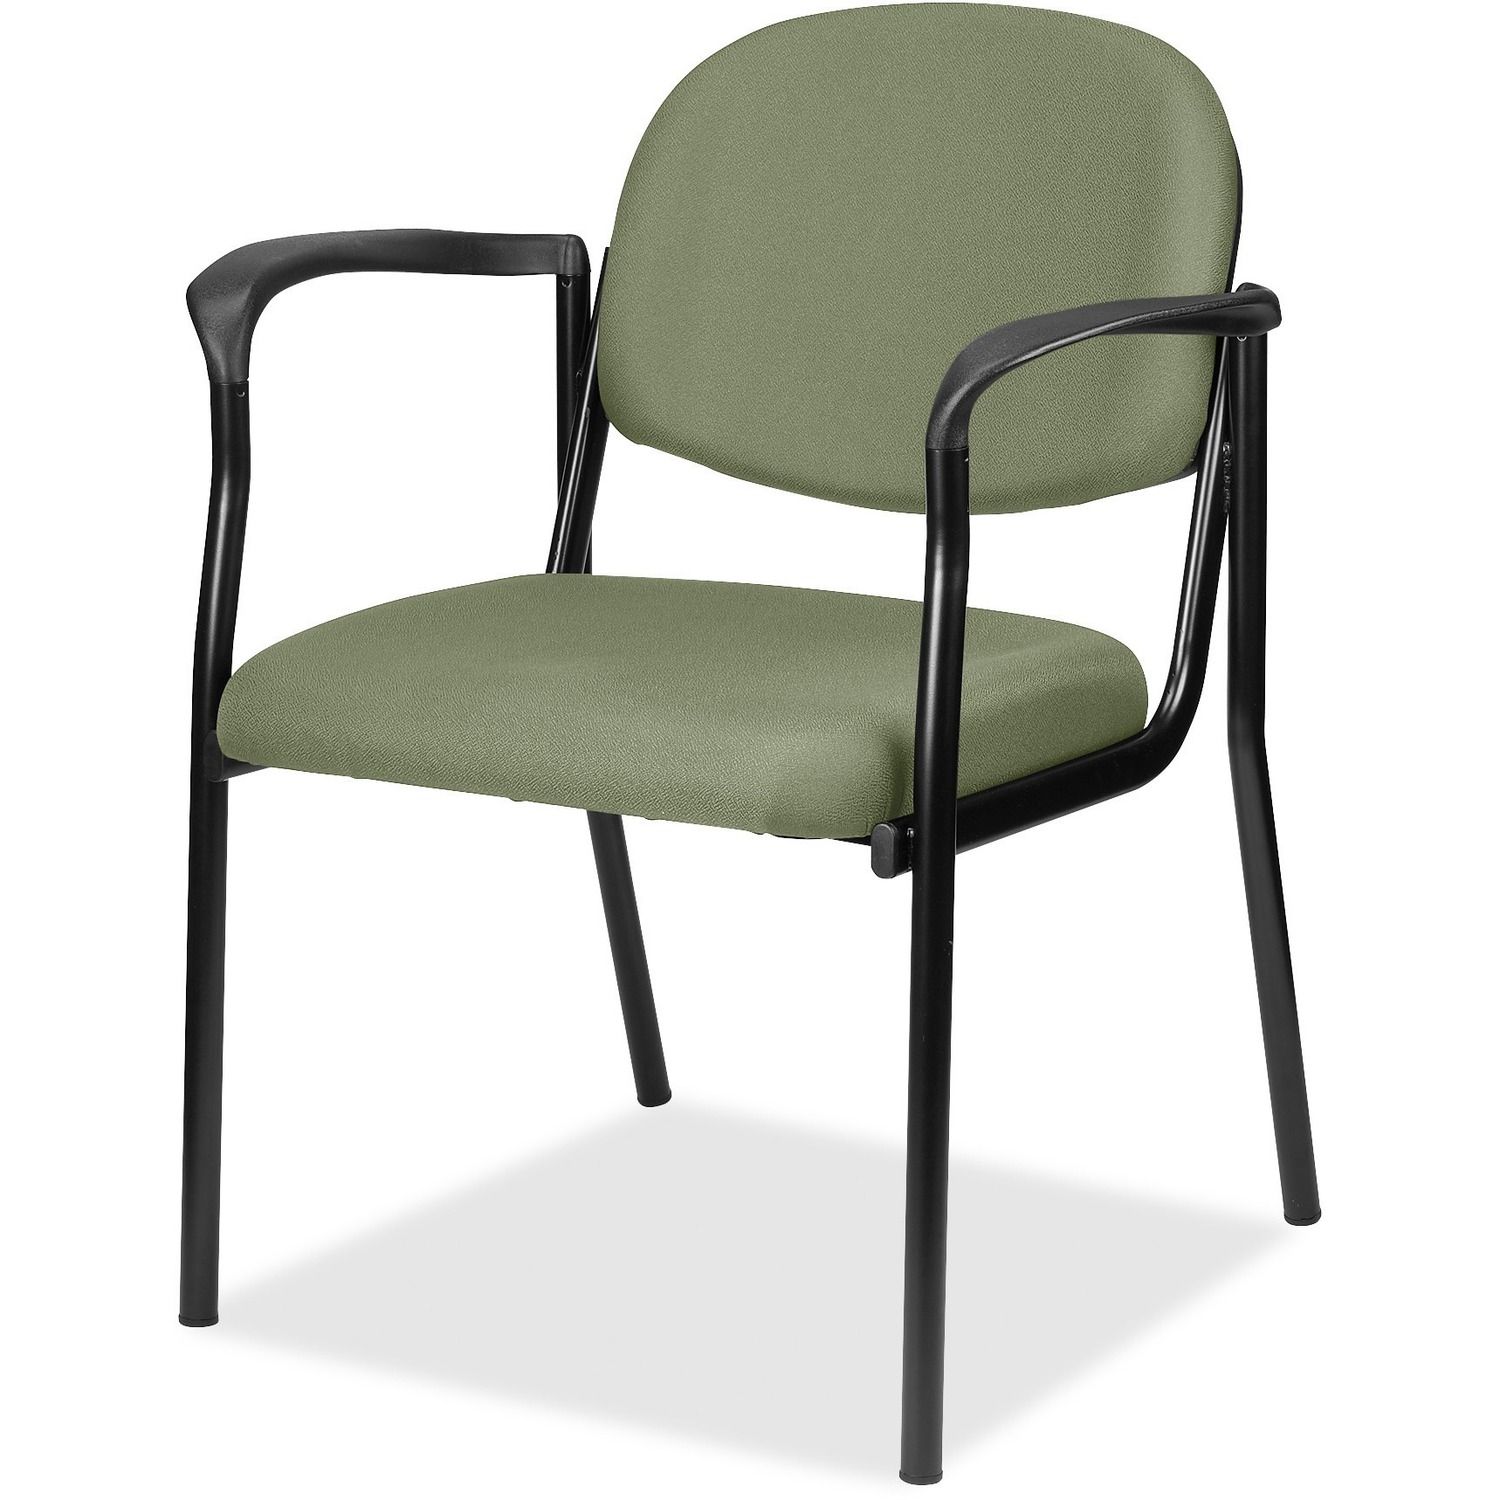 dakota with Arms Mint Chocolate Fabric Seat, Mint Chocolate Fabric Back, Four-legged Base, 1 Each